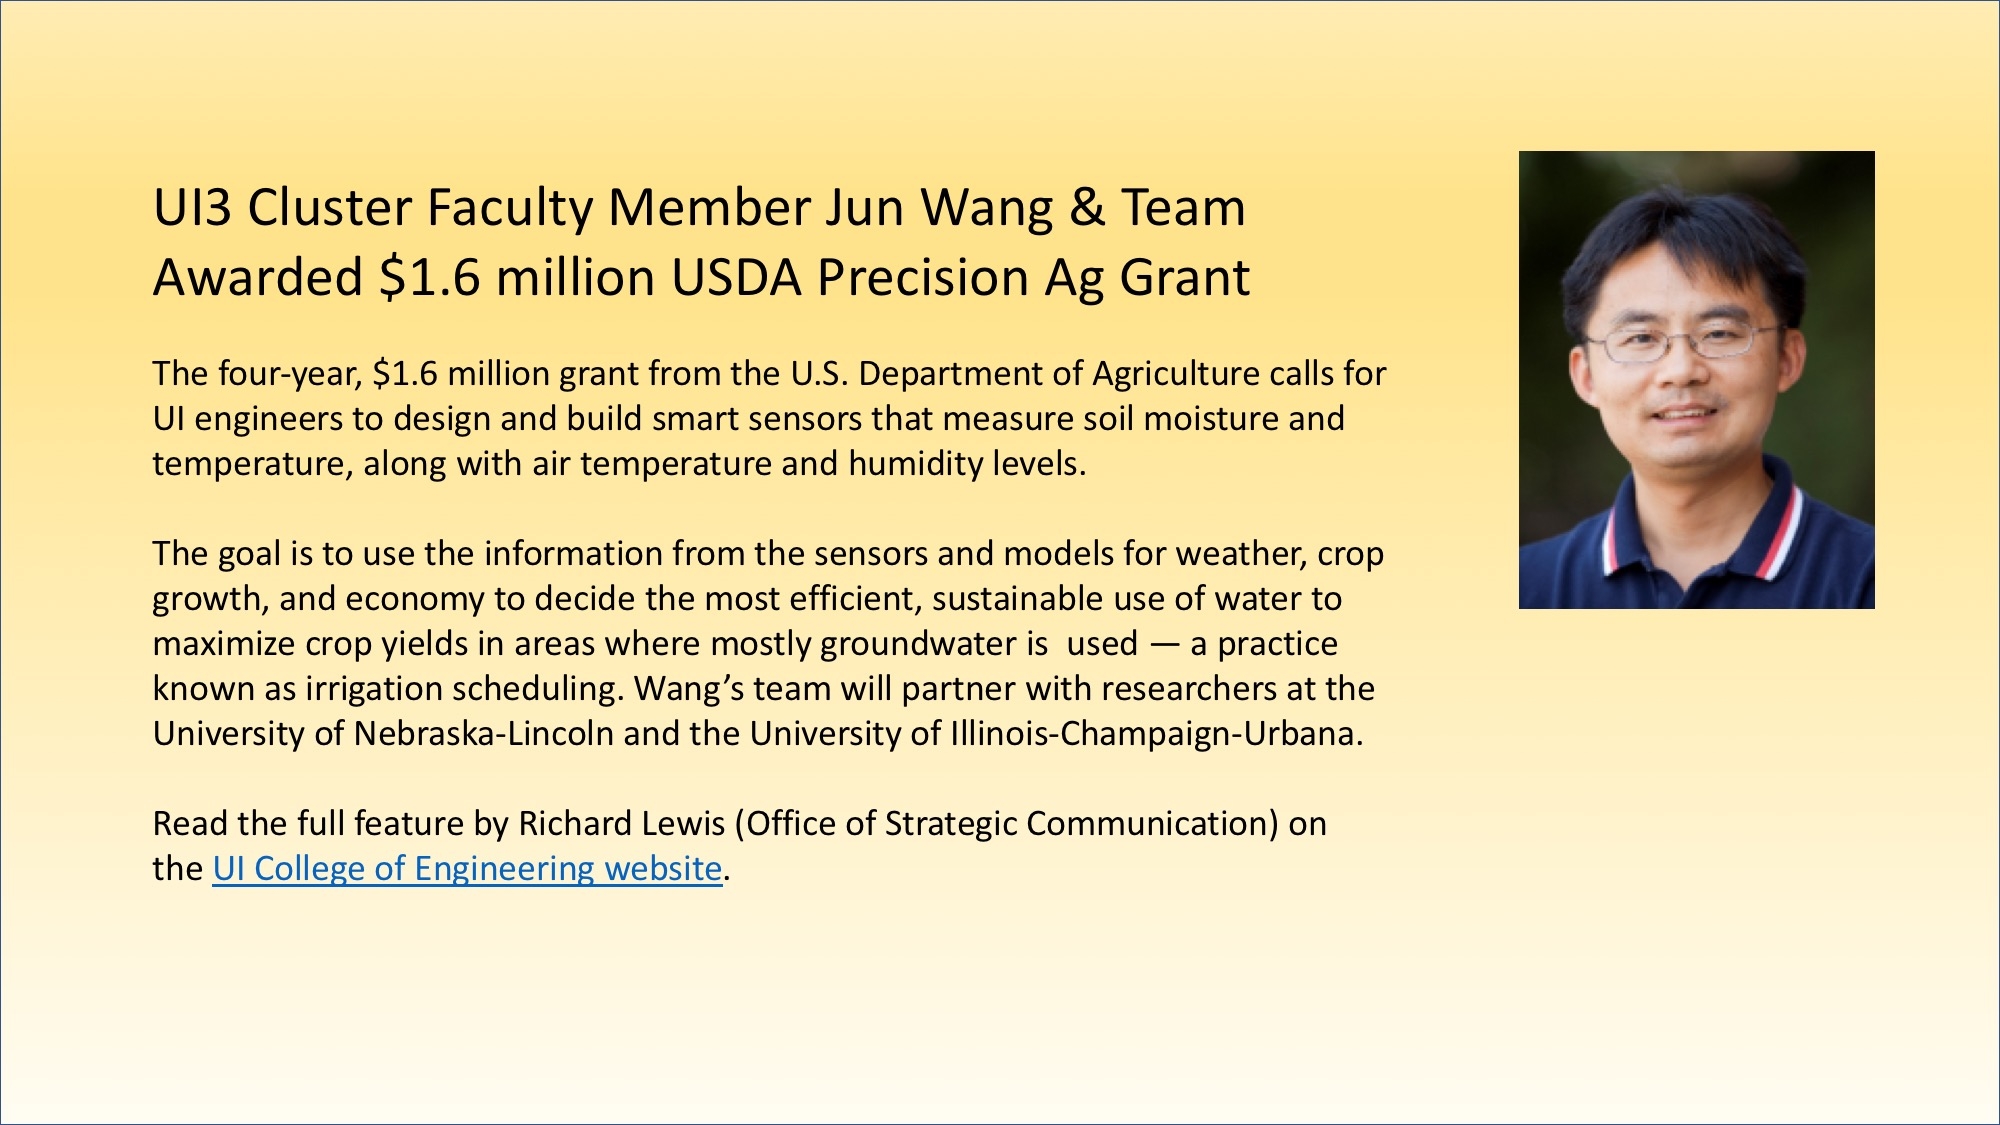 USDA Award Jun Wang